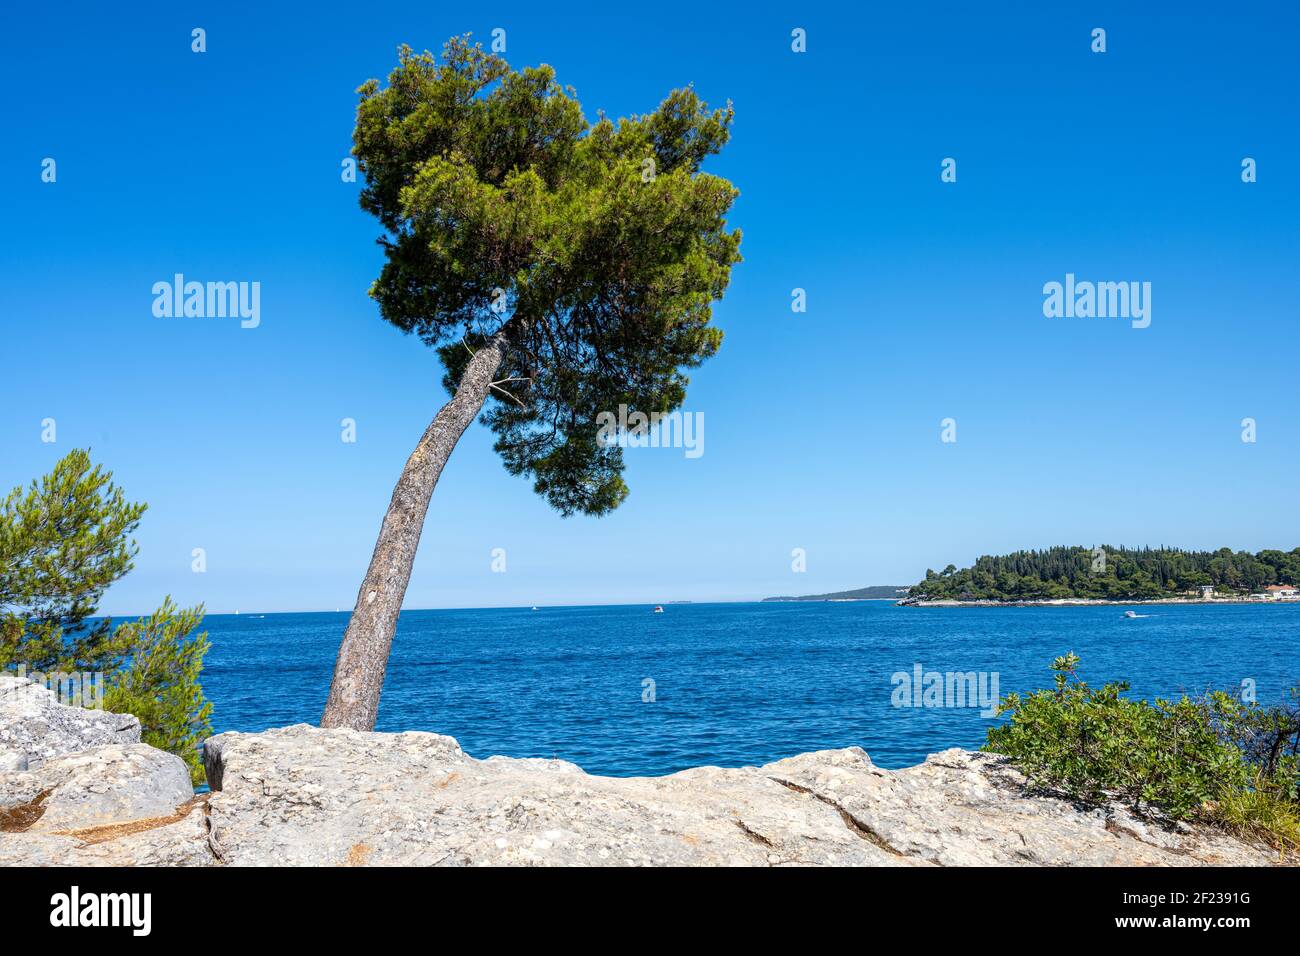 Pine tree by the sea seen in Croatia Stock Photo